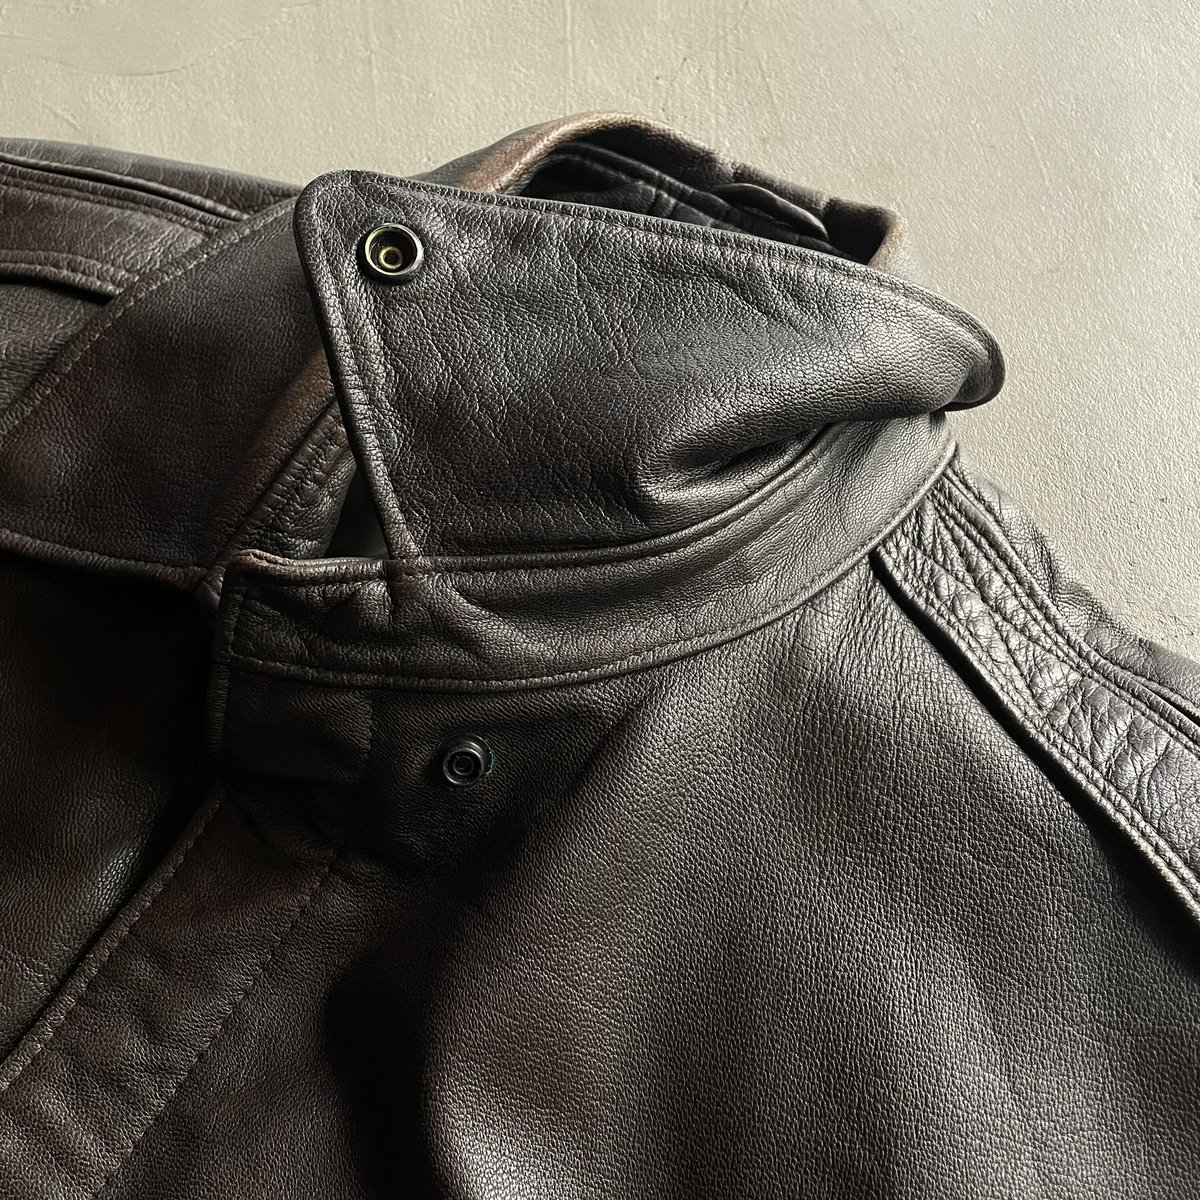 s~ L.L.Bean A type leather flight jacket